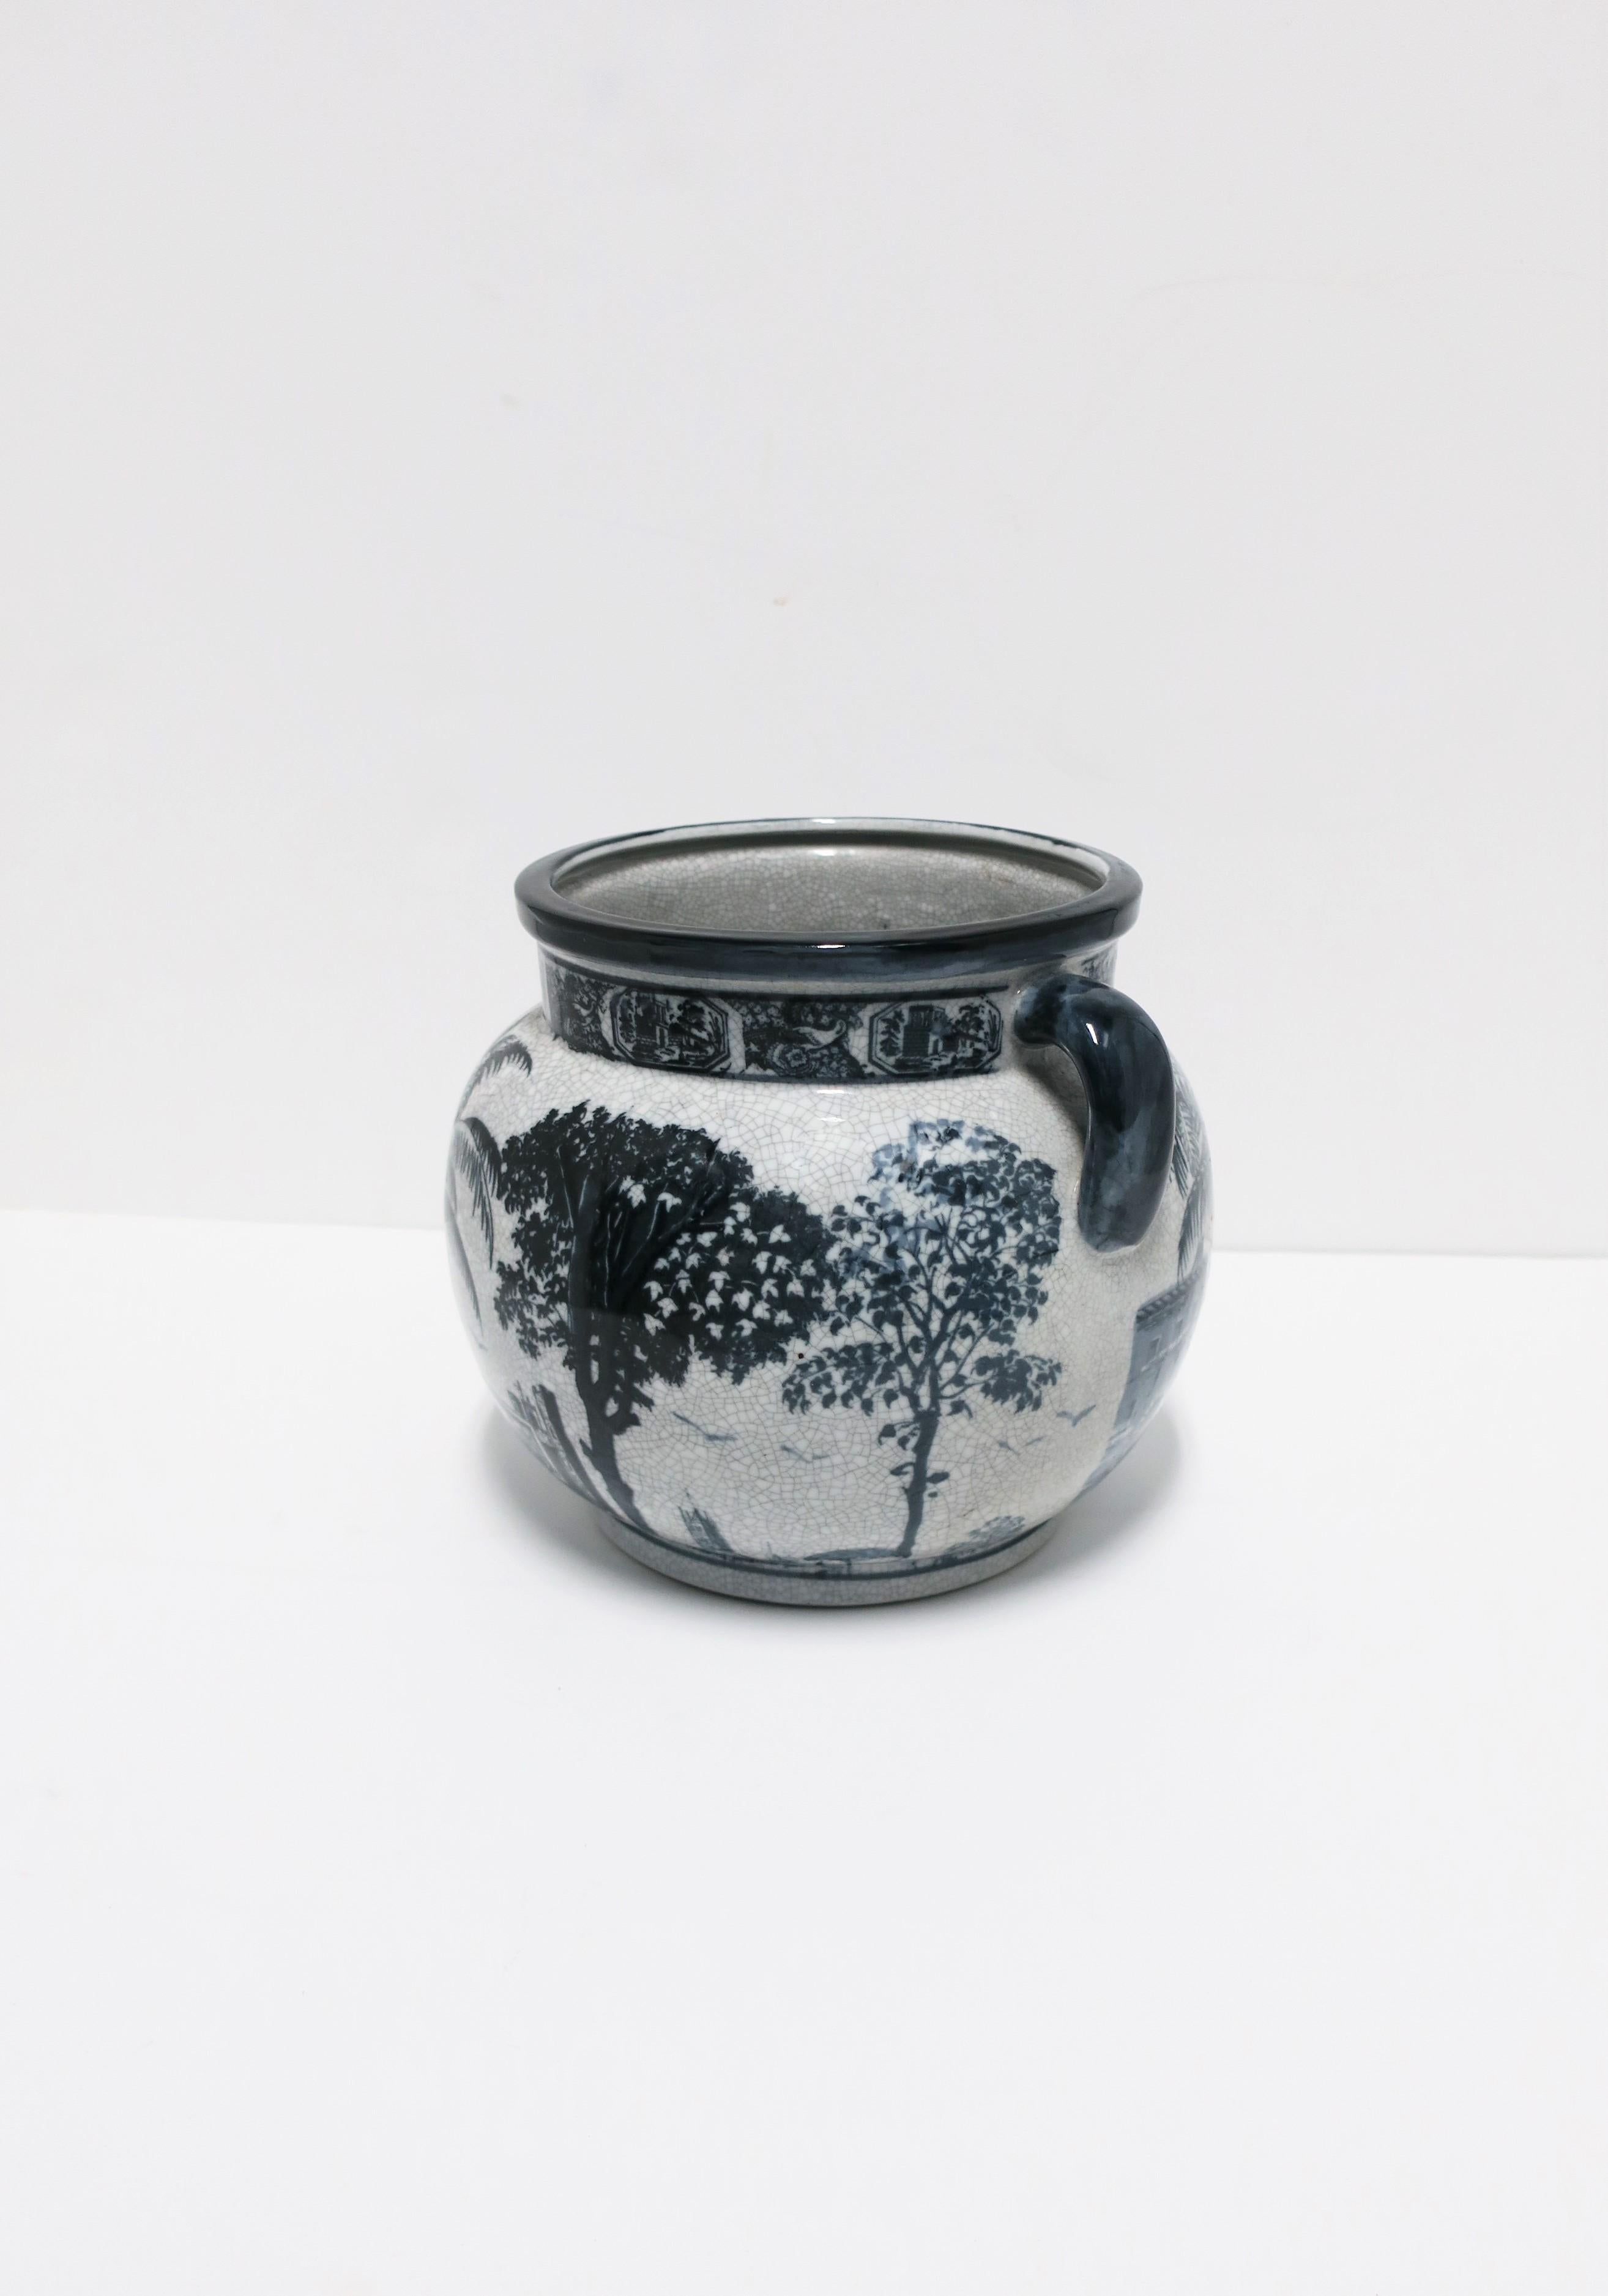 Late 20th Century Black and White 'Toile' Ceramic Cachepot Jardinière Plant Pot Holder